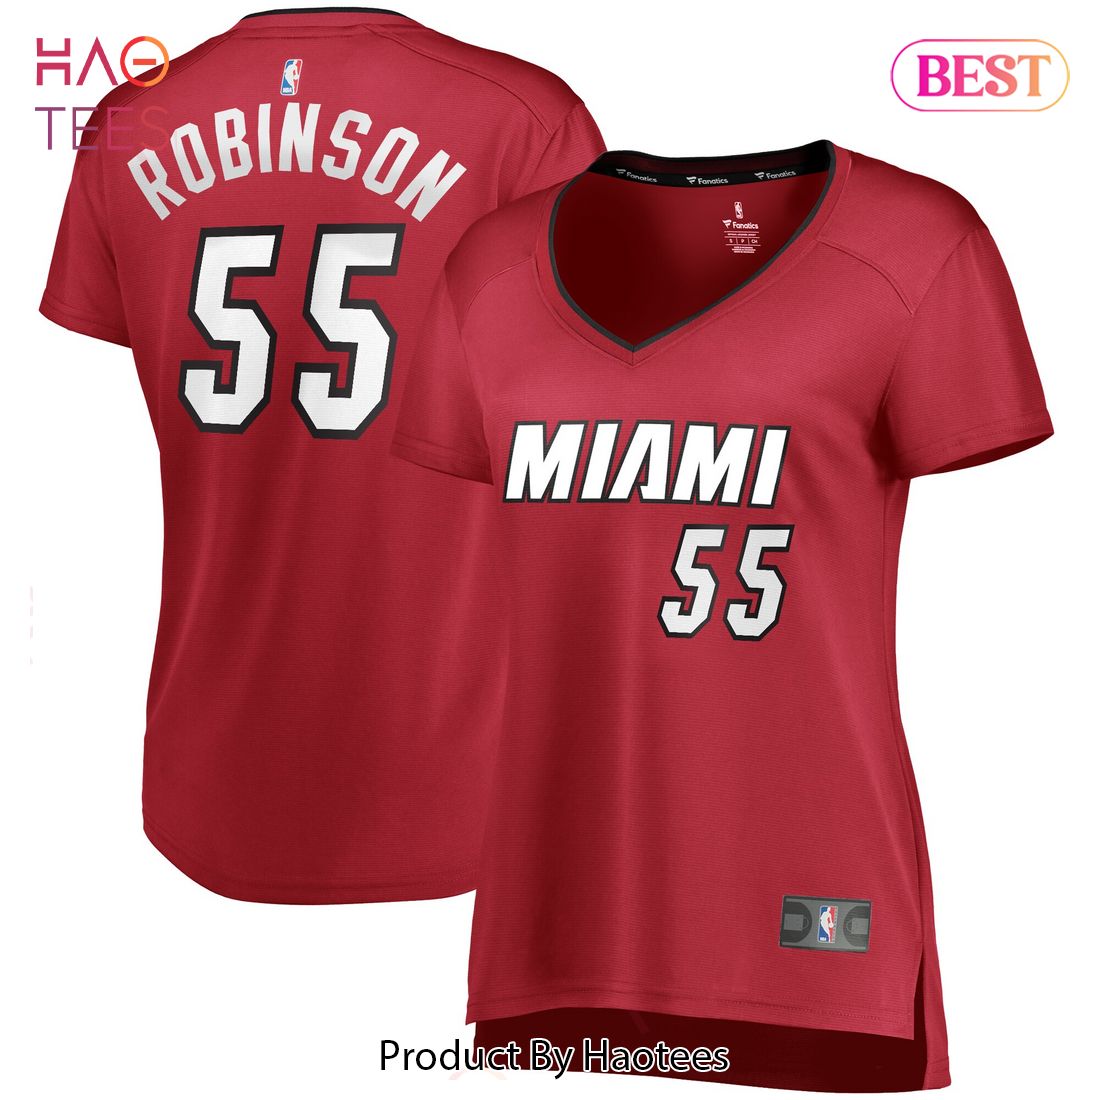 Duncan Robinson Miami Heat Fanatics Branded Women’s Fast Break Player Jersey Statement Edition Maroon